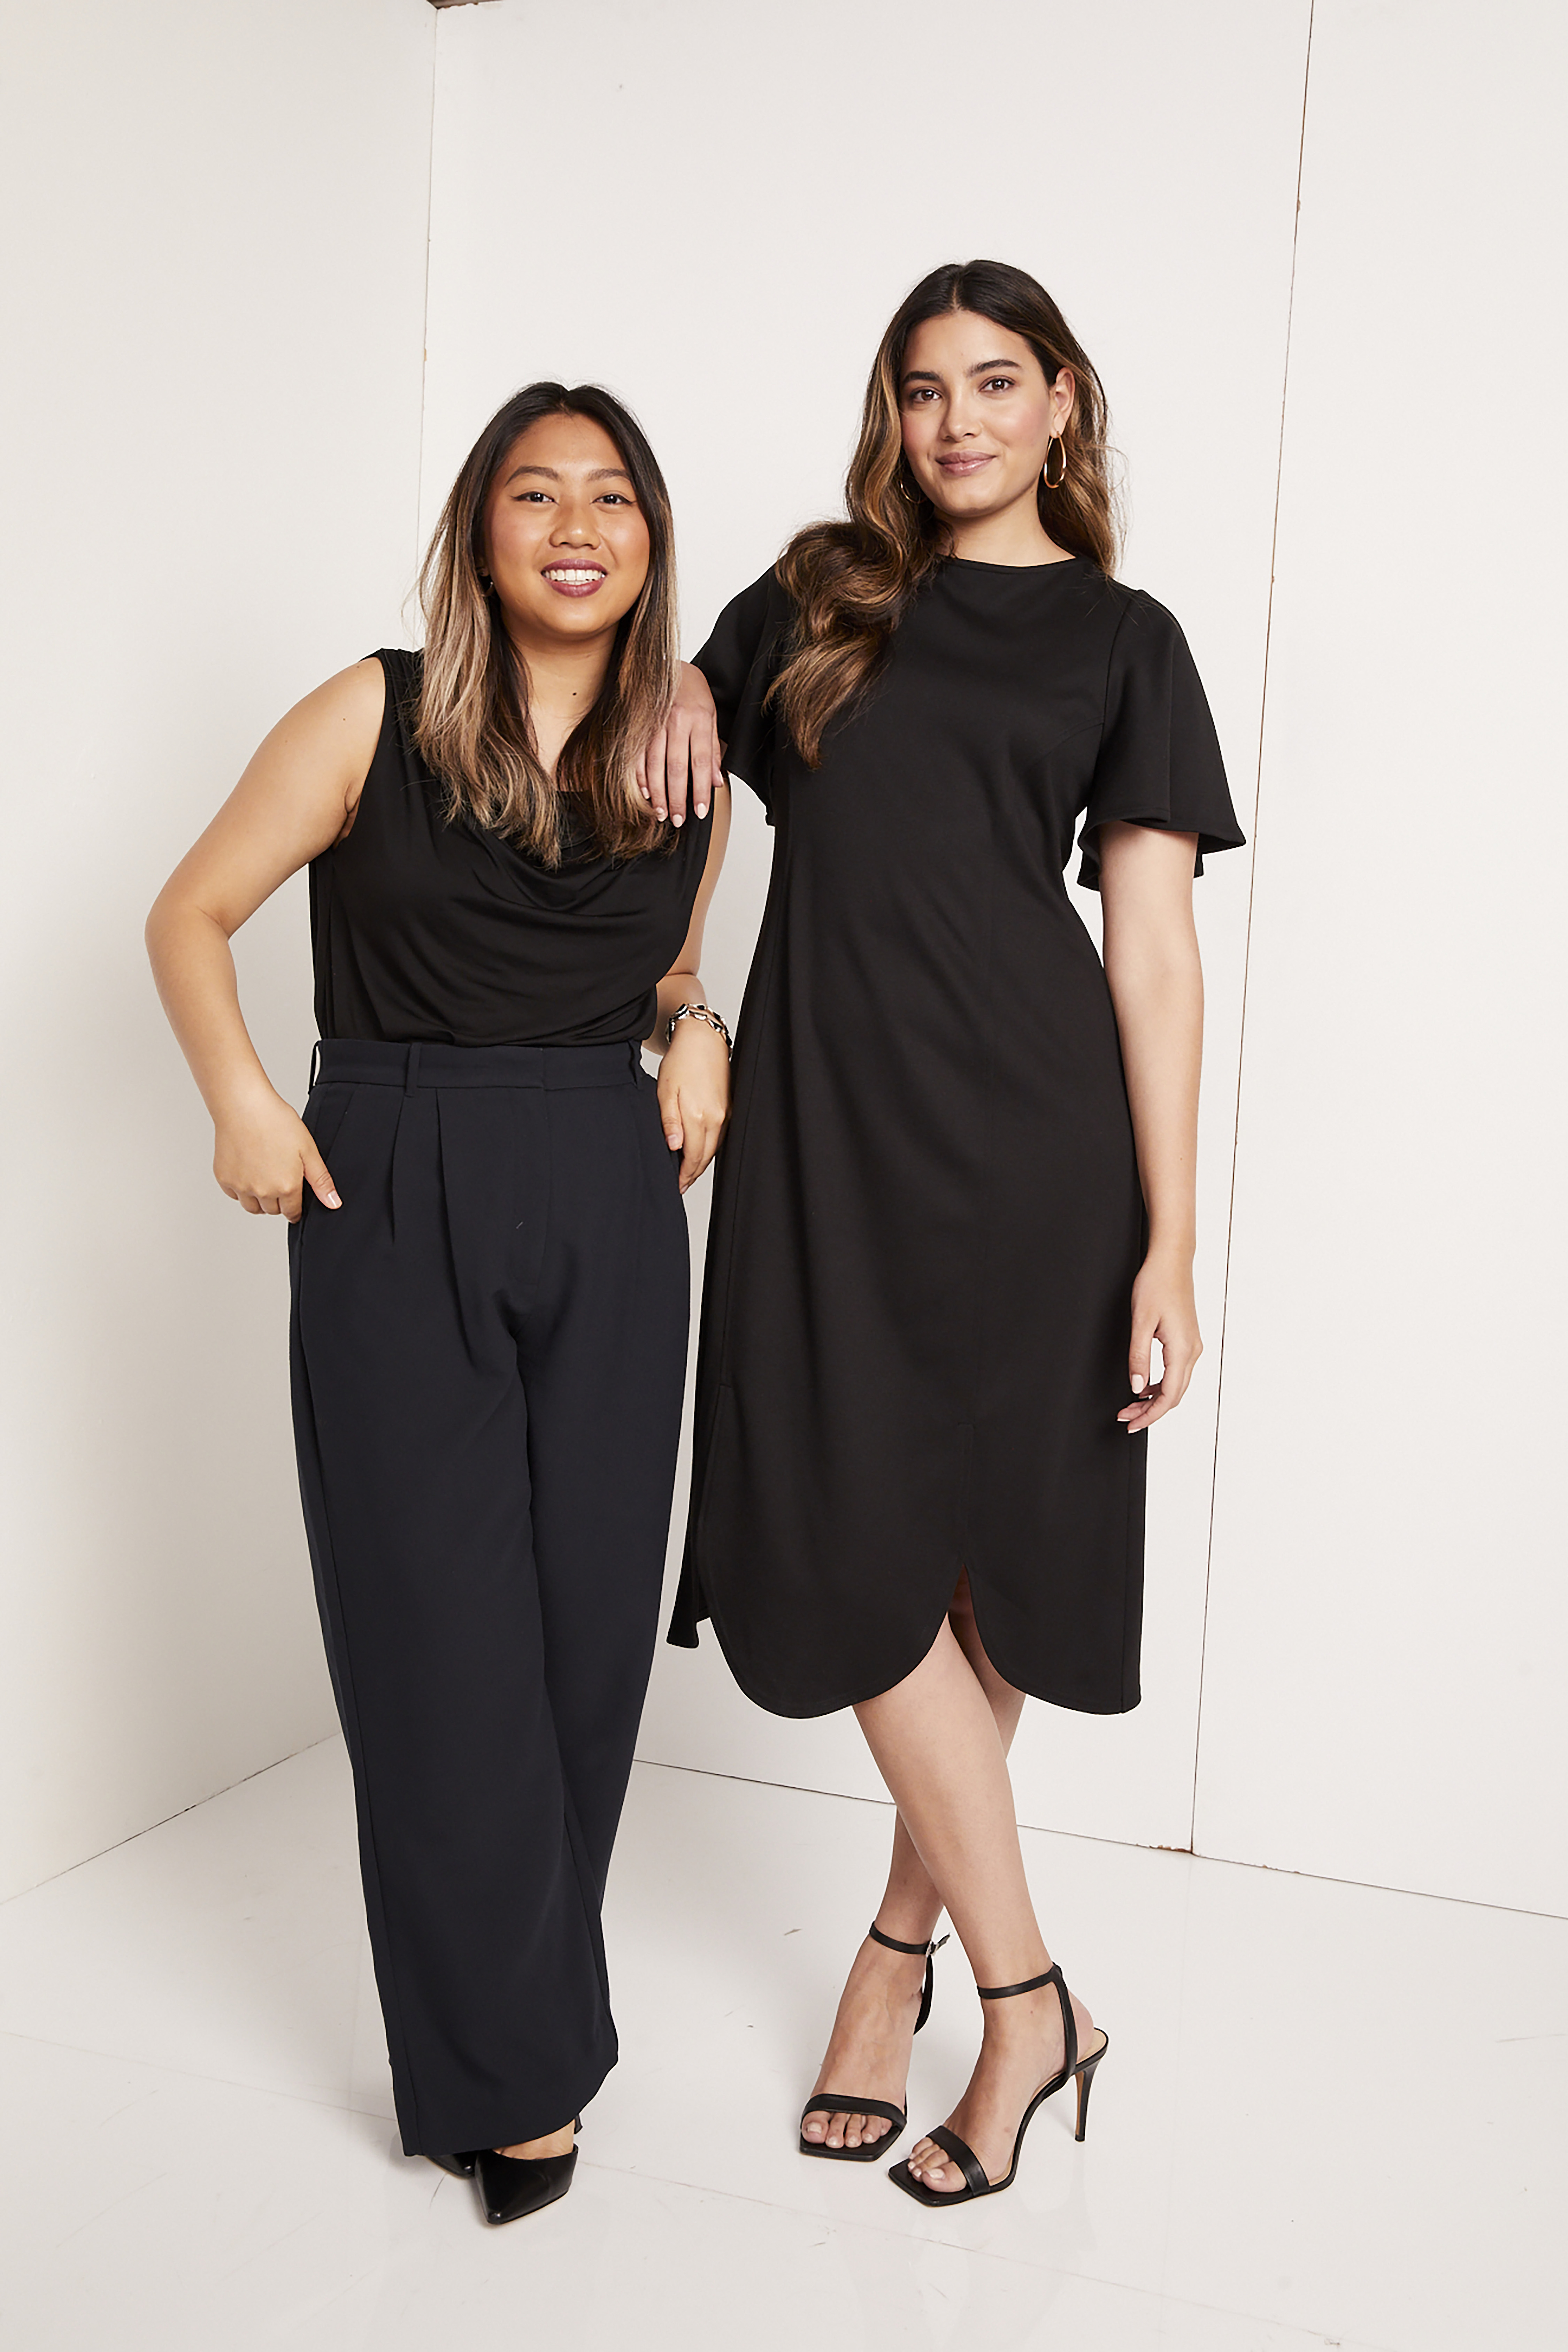 Syracuse University design student Nina Chen (left) with a model photo shoot featuring her award-winning “Tulip Dress” design.